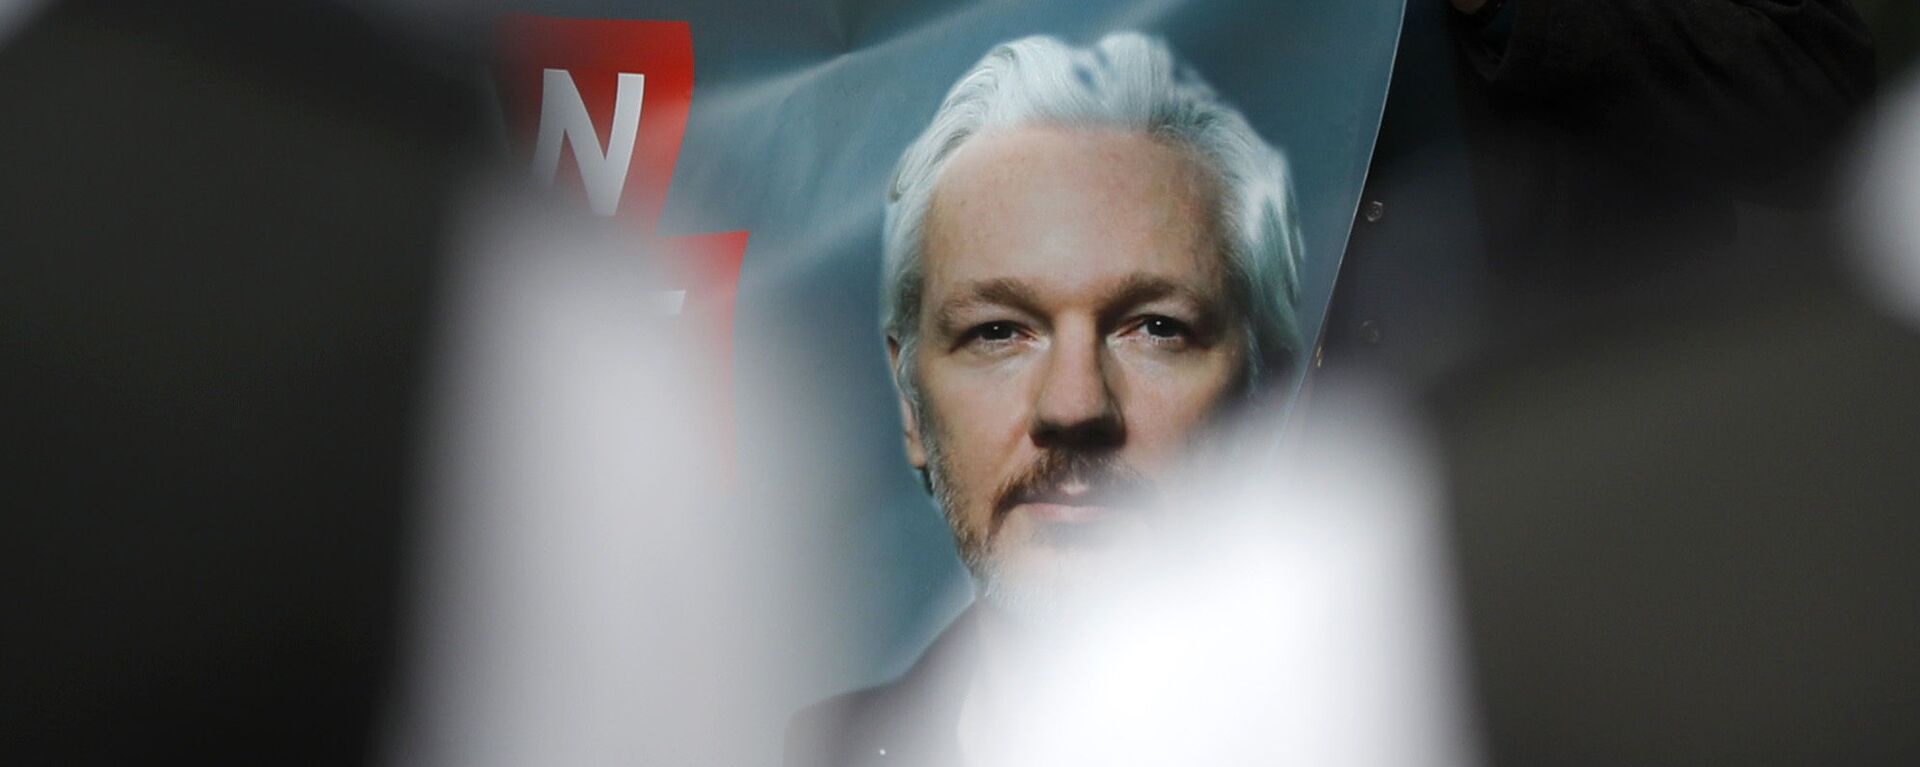 Retrato de Julian Assange, fundador de Wikileaks - Sputnik Mundo, 1920, 27.09.2021